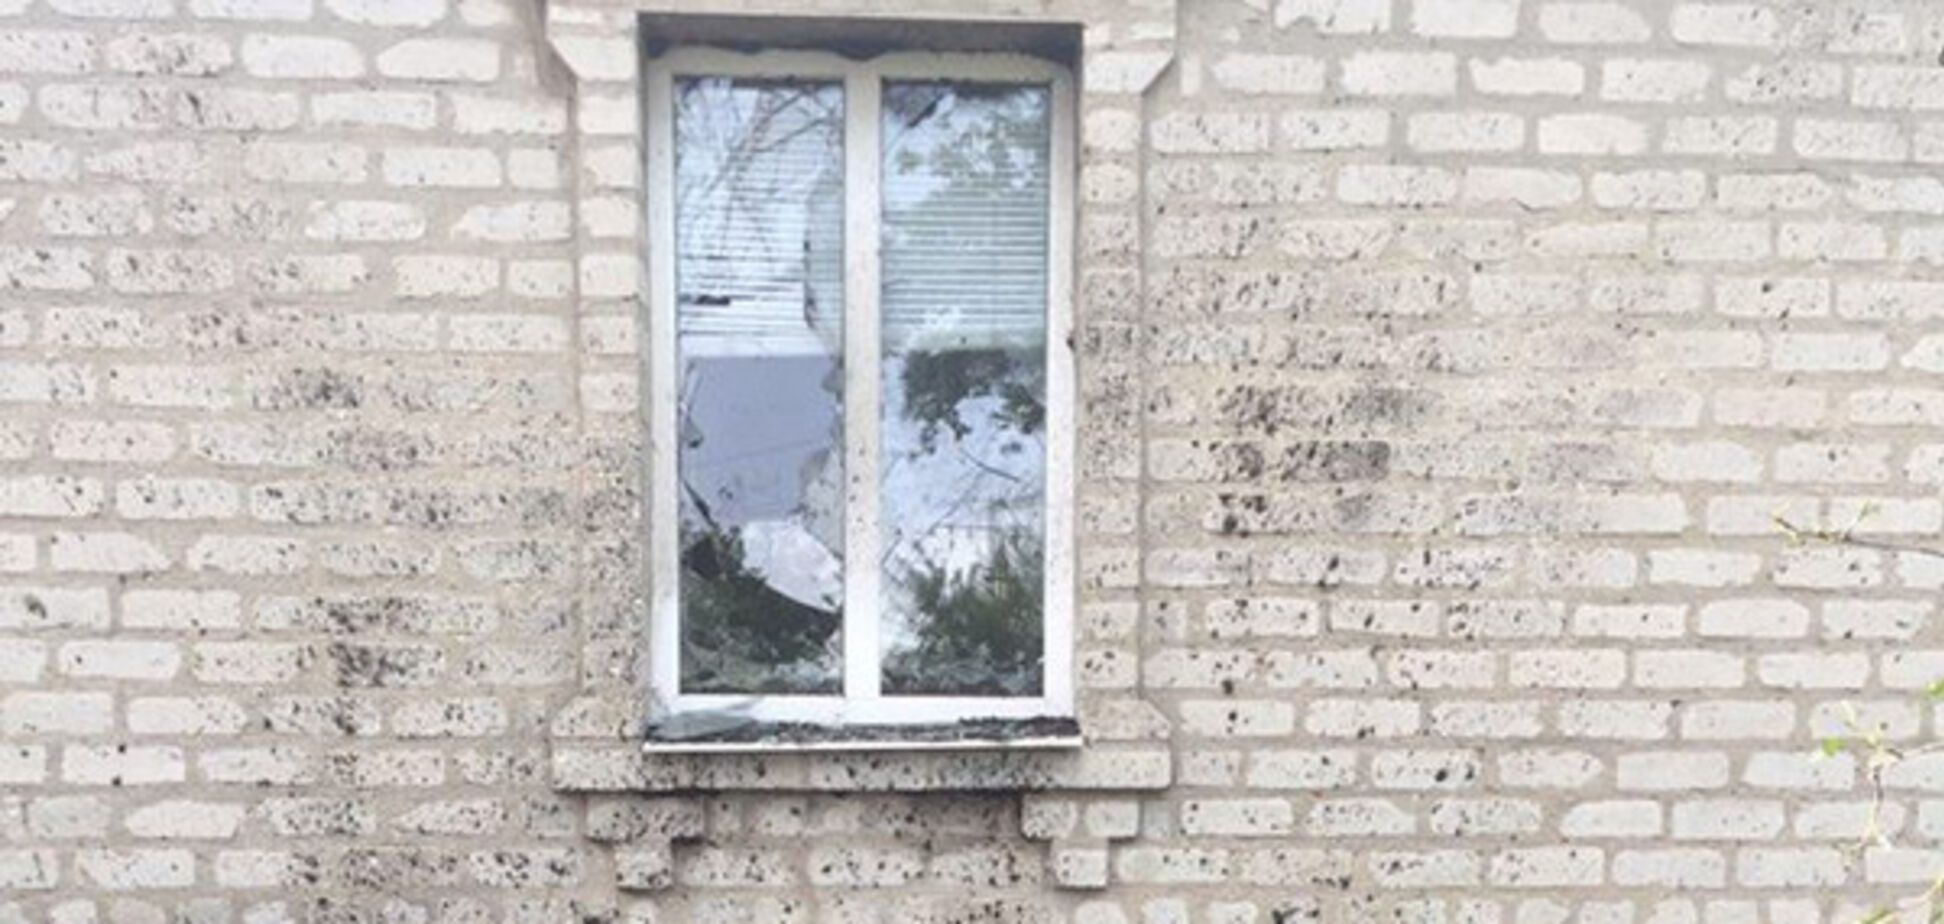 Стреляли во время похорон: появились фото последствий обстрела Авдеевки террористами 'ДНР'